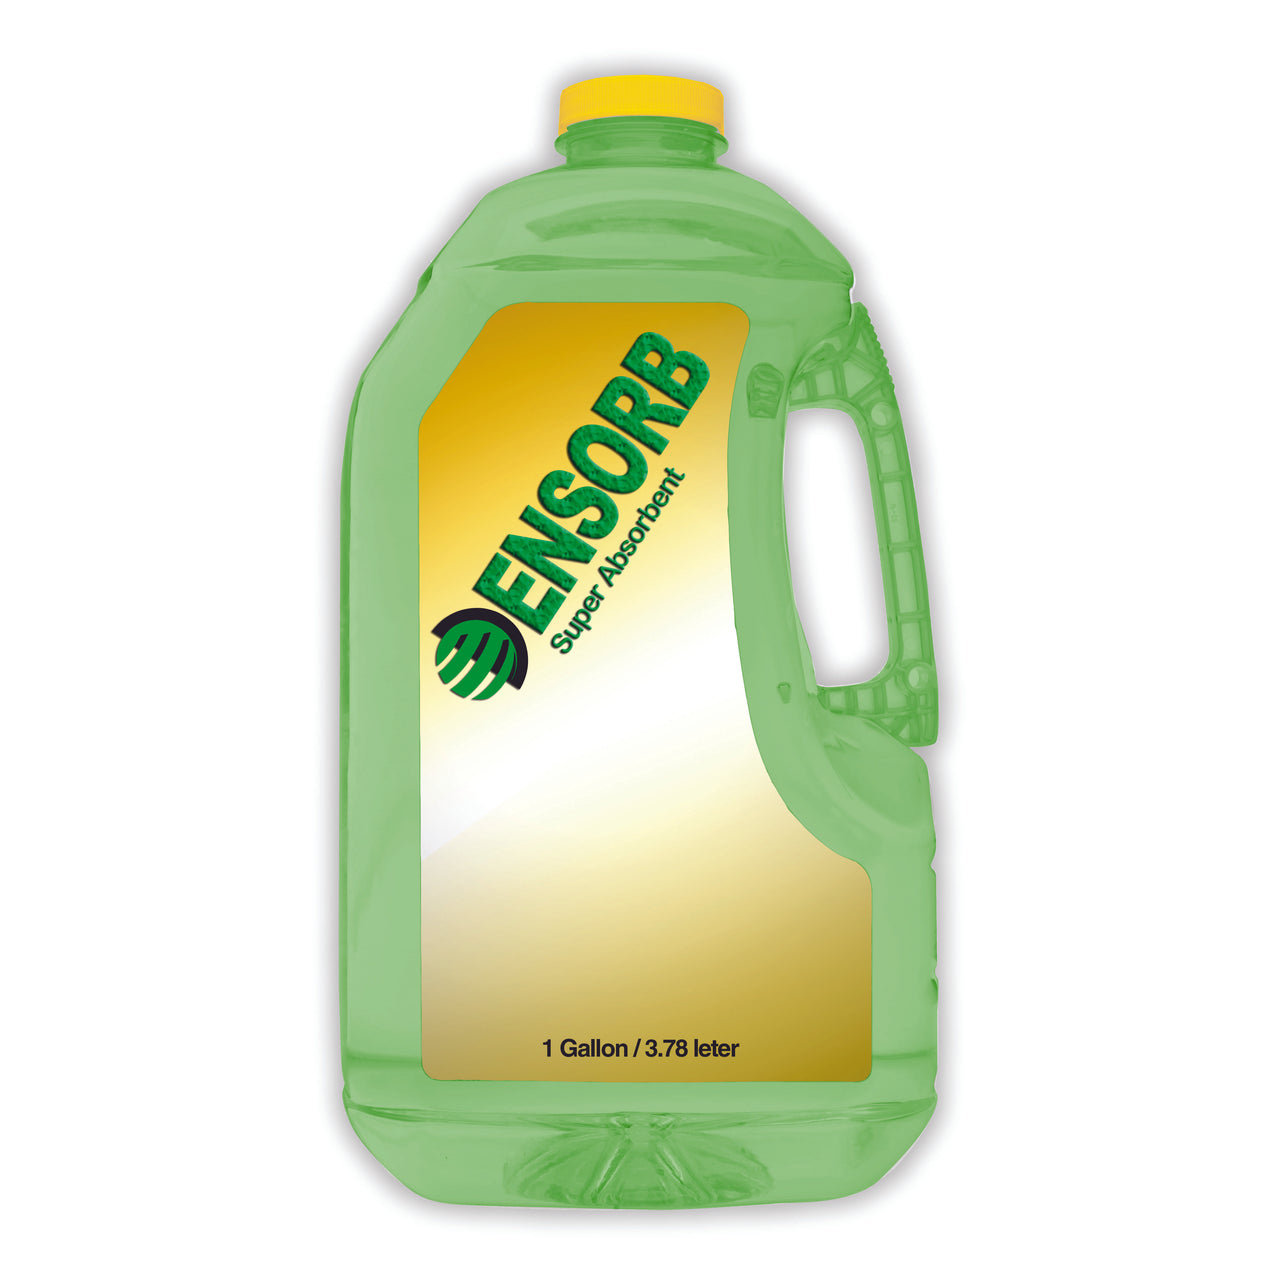 ENSORB Super Cleaner/Degreaser 1-Gallon Bottle (4/Case)